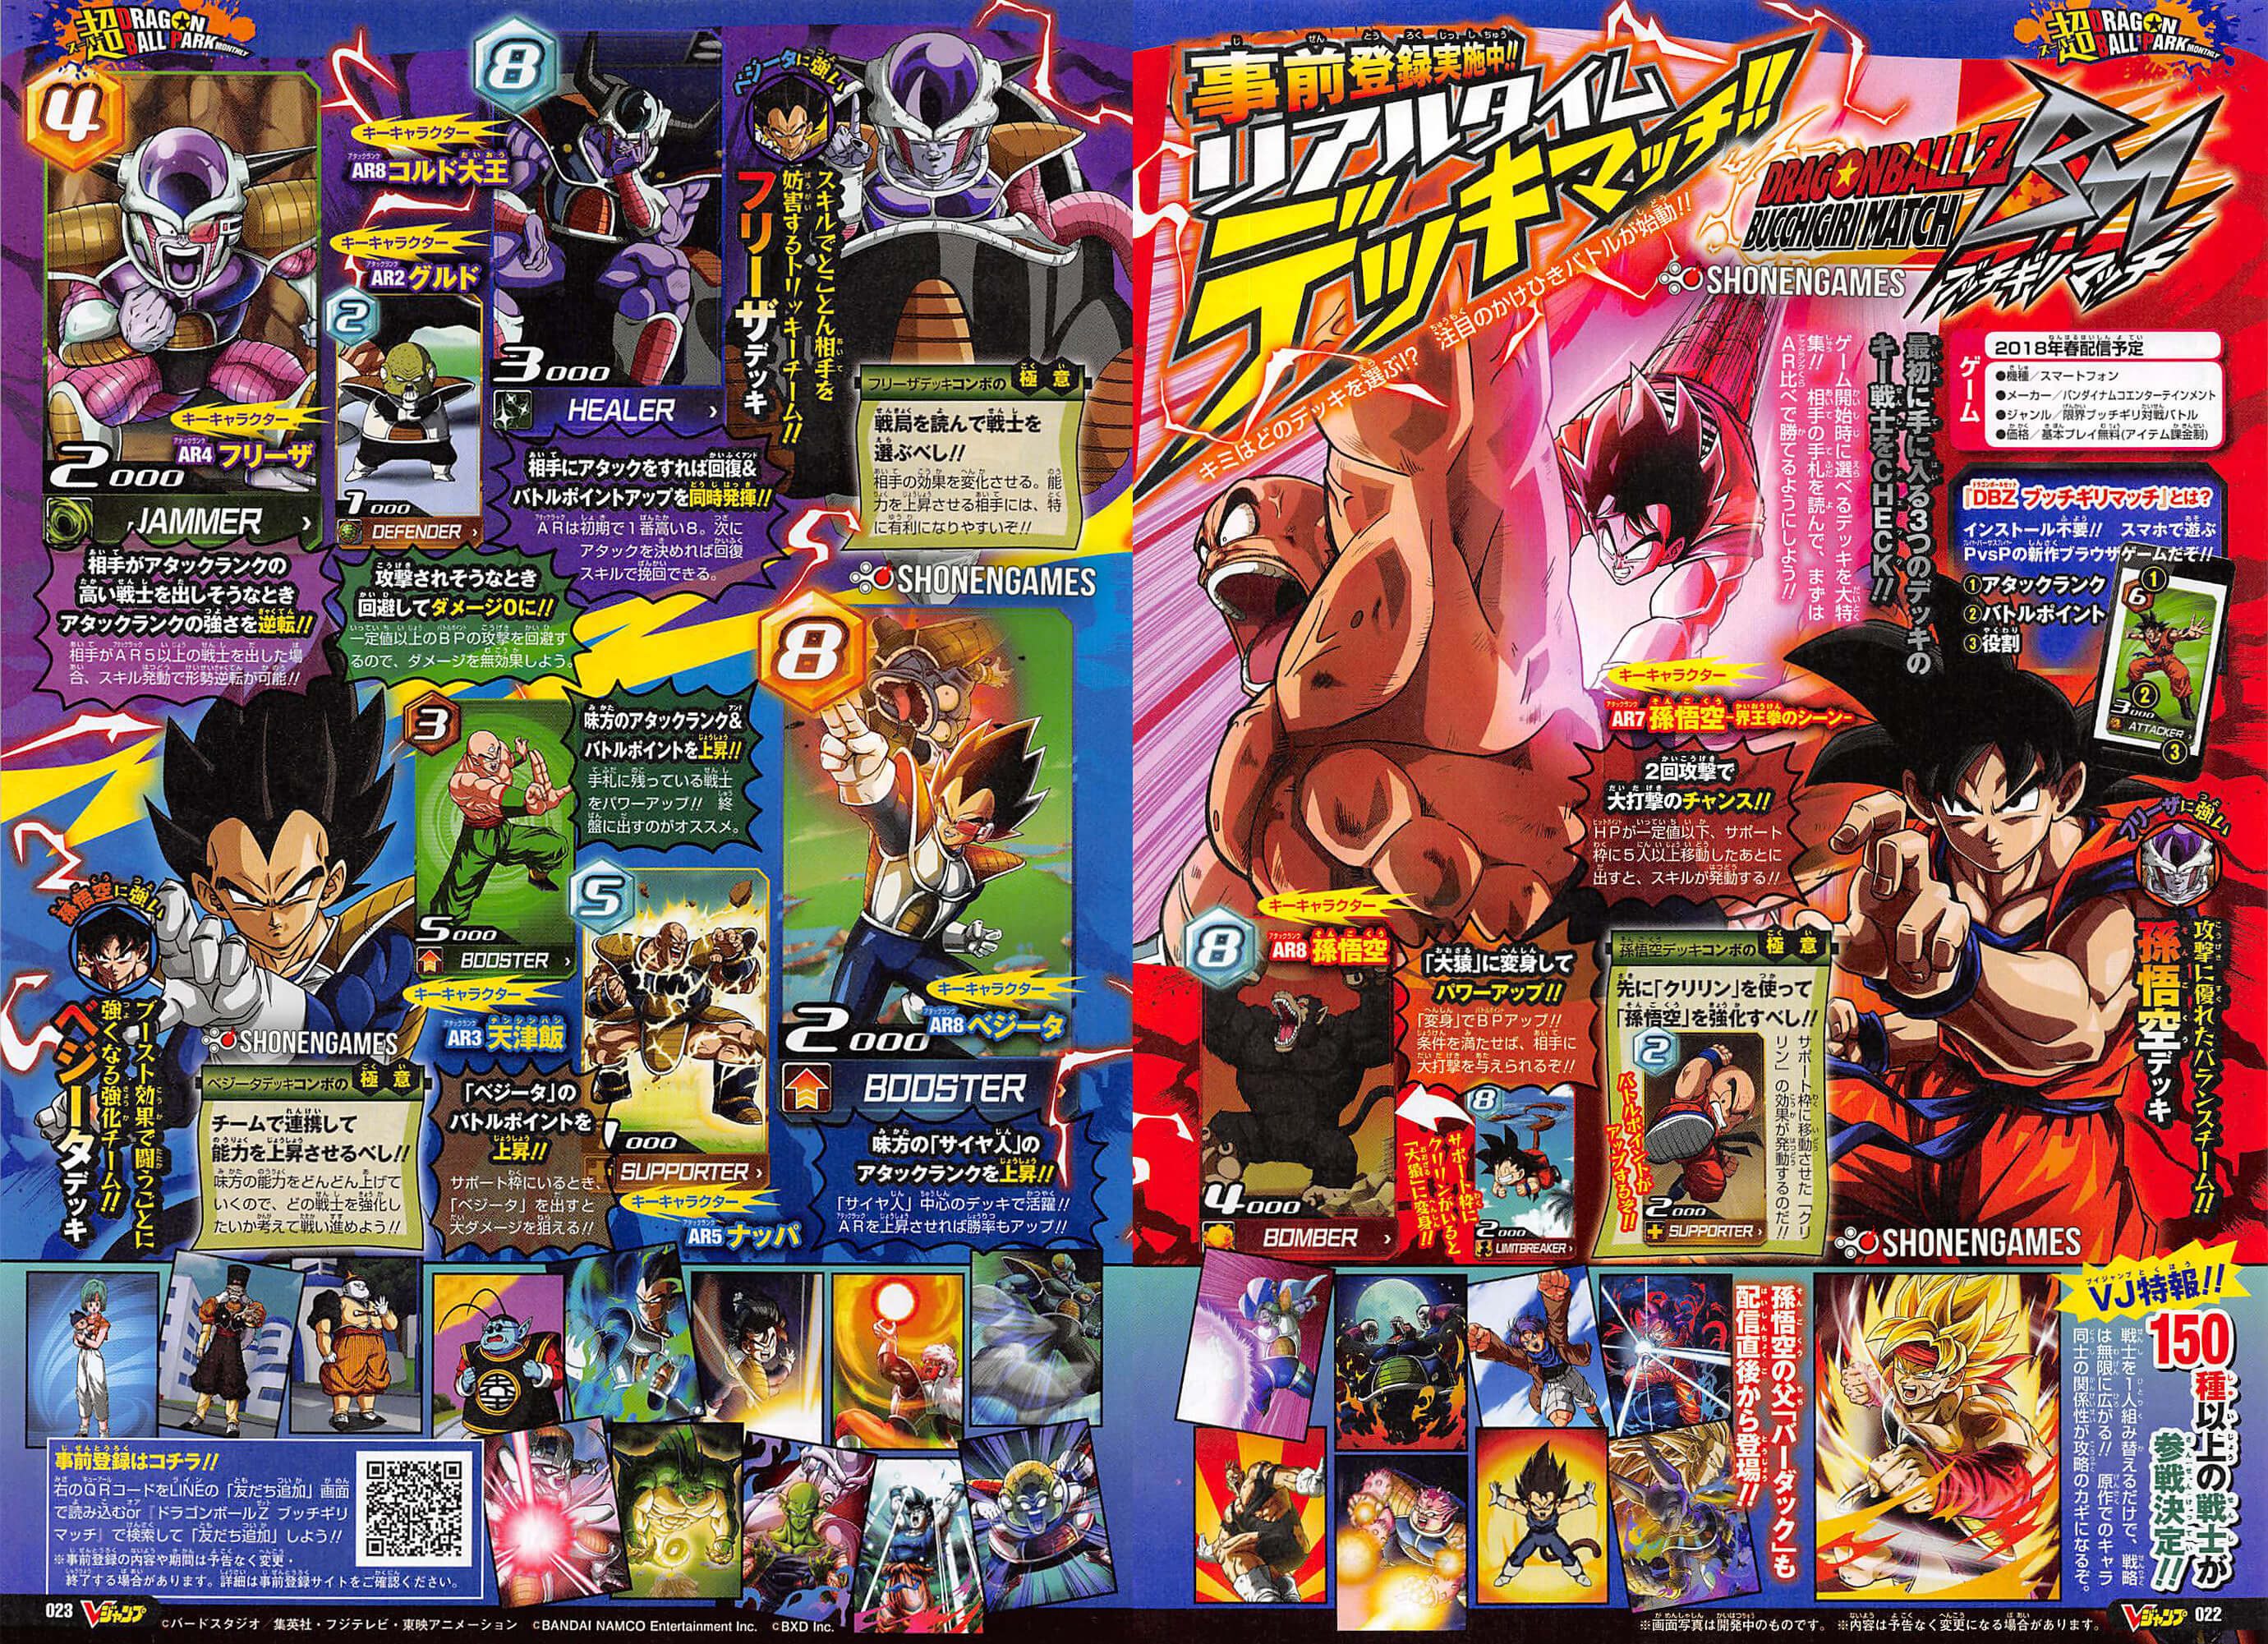 Dragon Ball Z: Bucchigiri Match Showcases Card Arts & Character Types